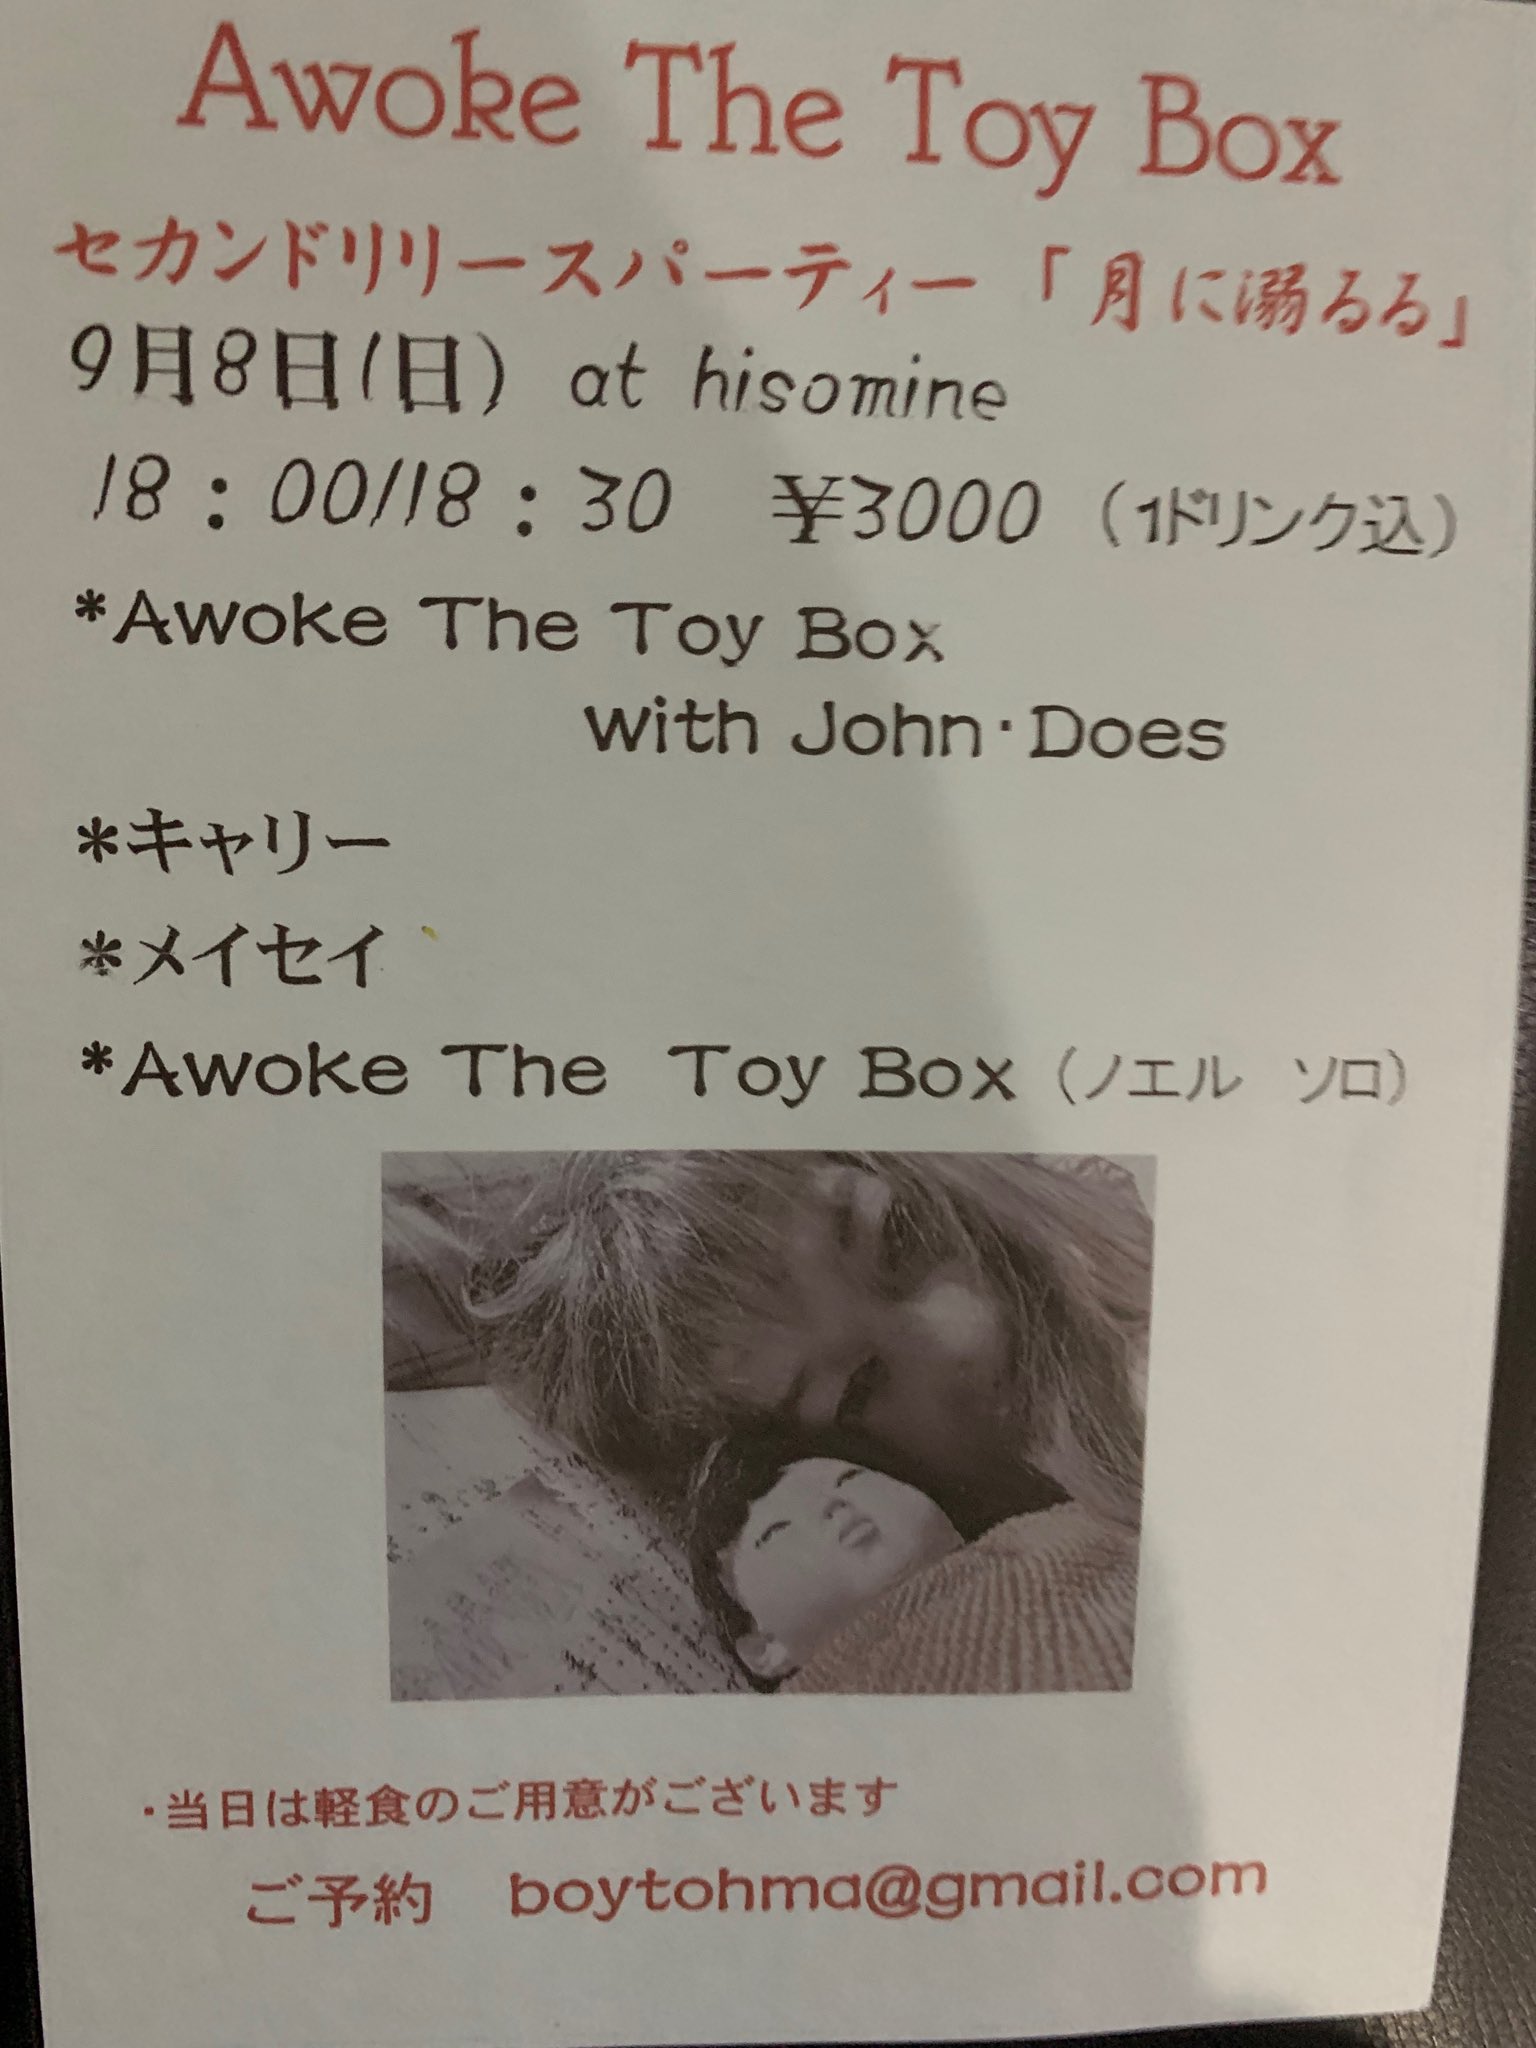 Awoke The Toy Box セカンドアルバムリリースパーティー「月に溺るる」